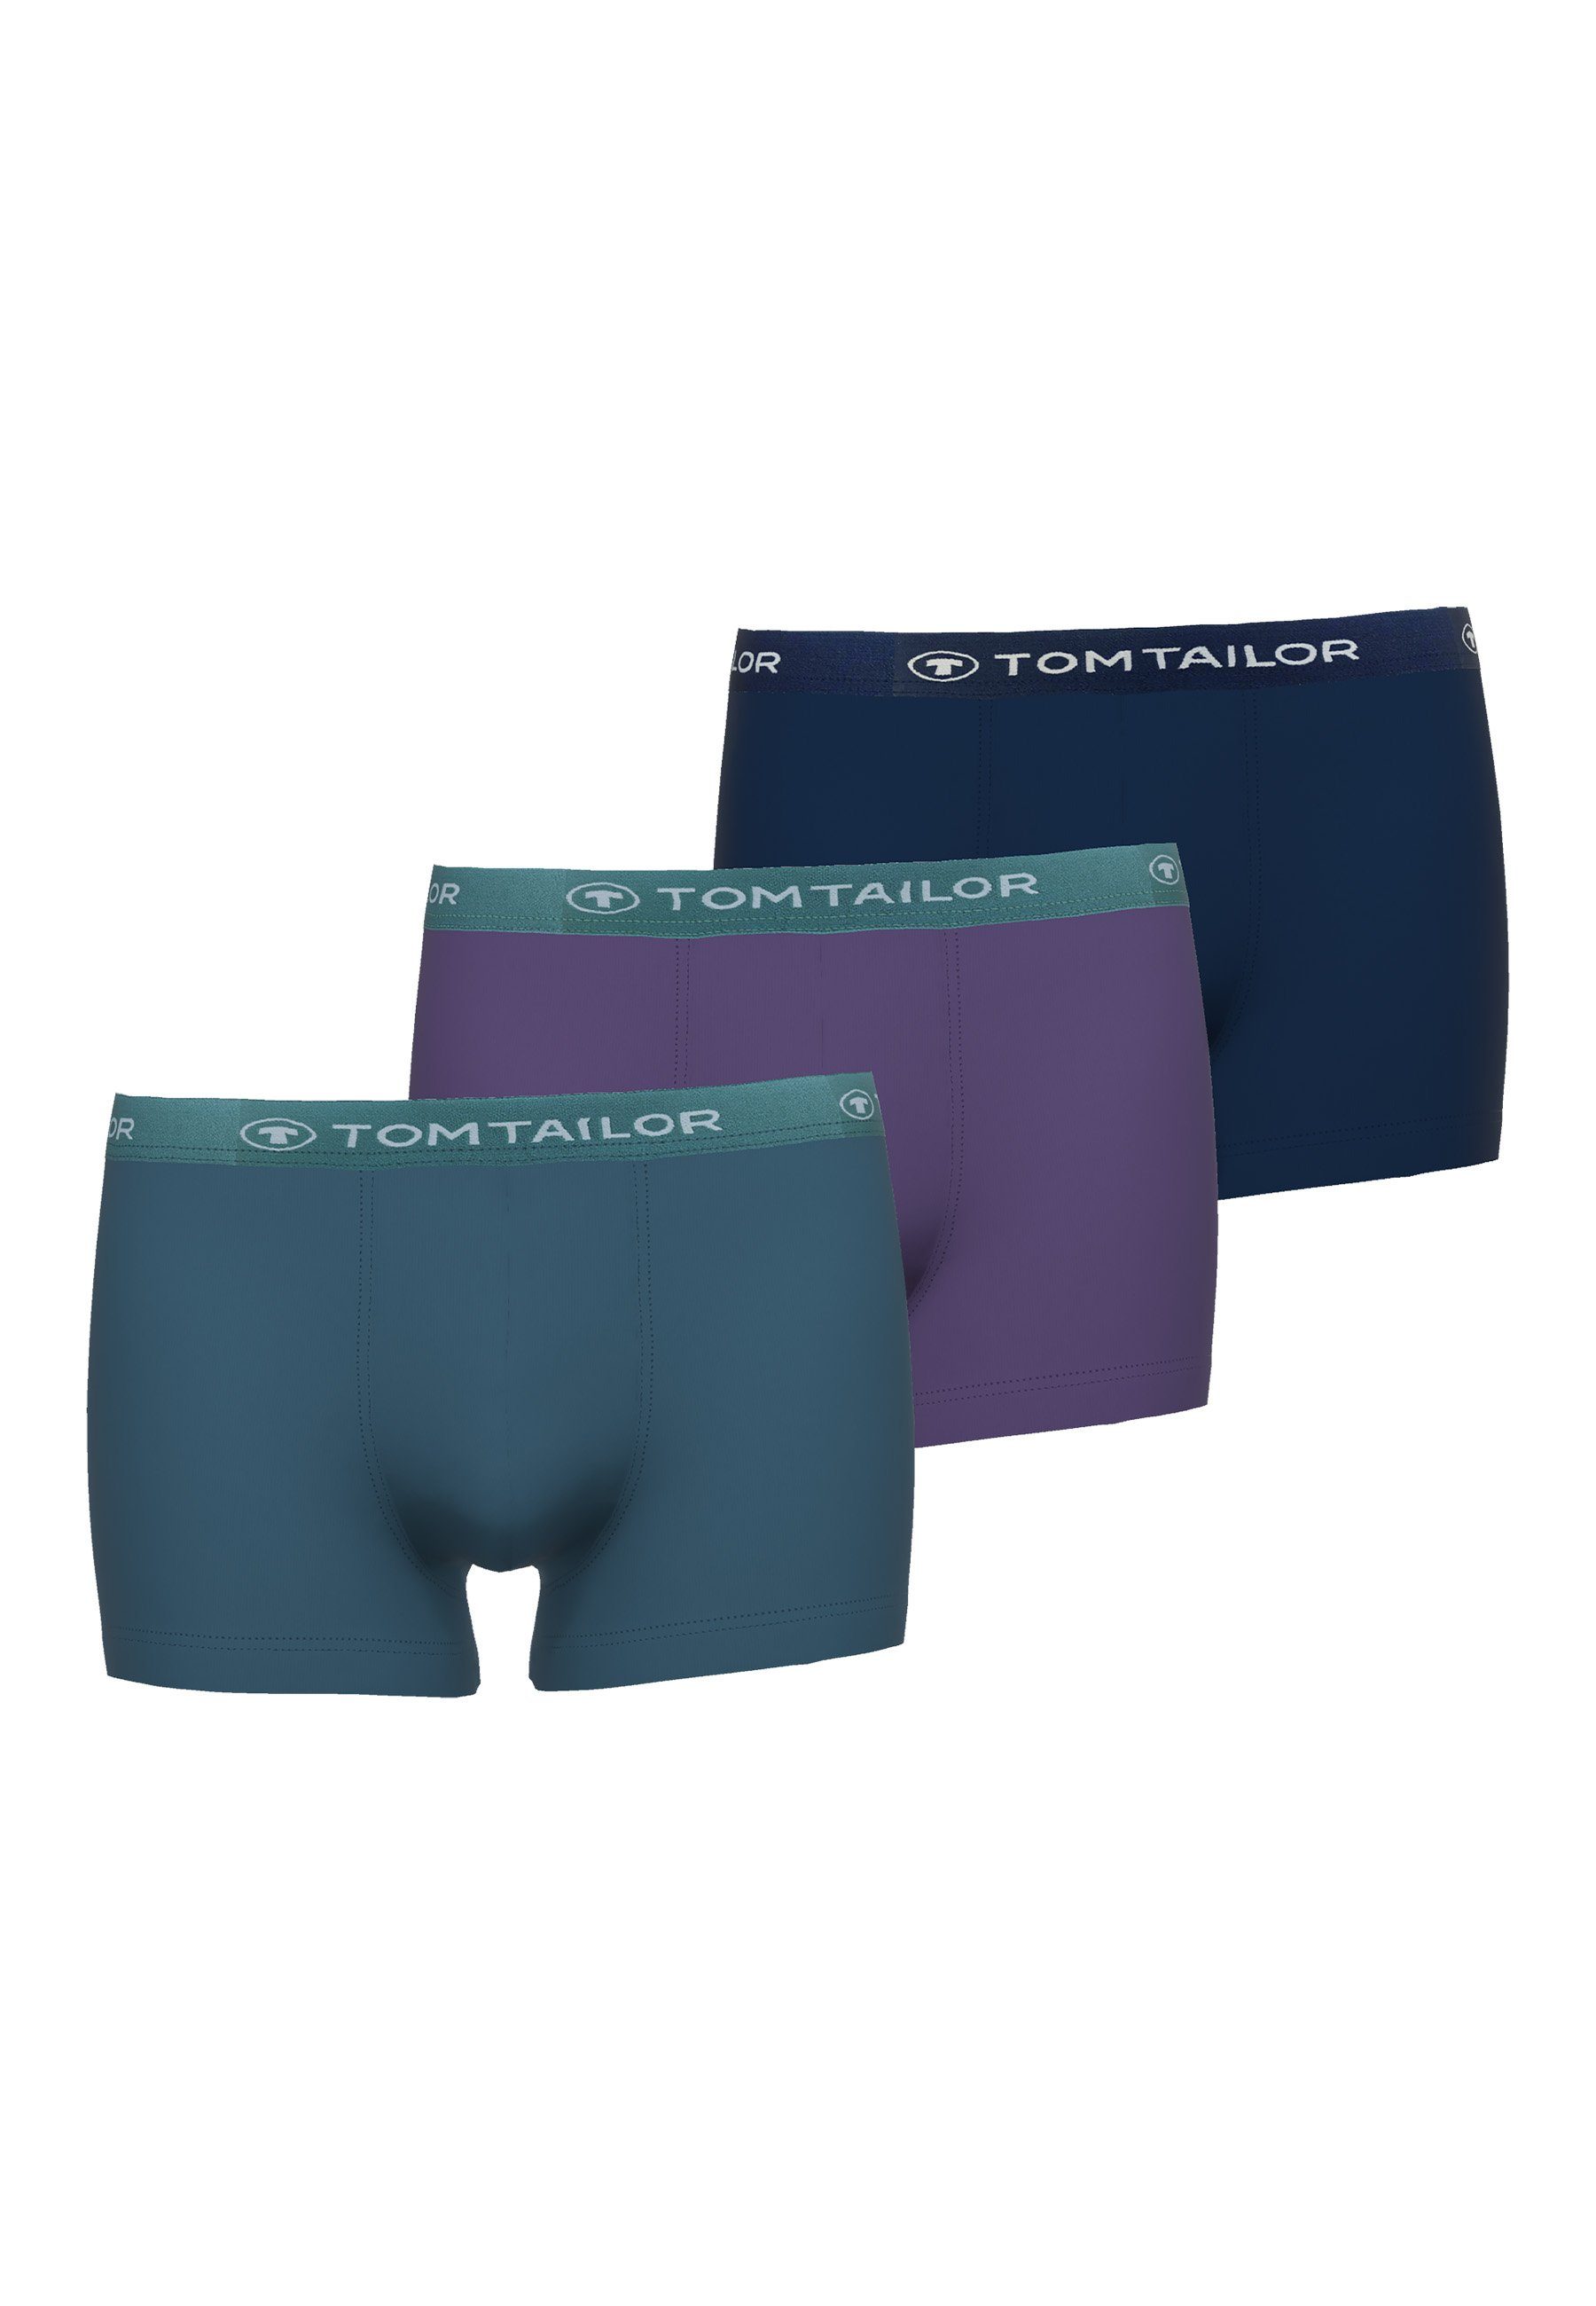 TOM TAILOR Boxershorts TOM TAILOR Herren Pants lila uni 3er Pack (3-St) lila-dunkel-multicolor1 | Boxershorts